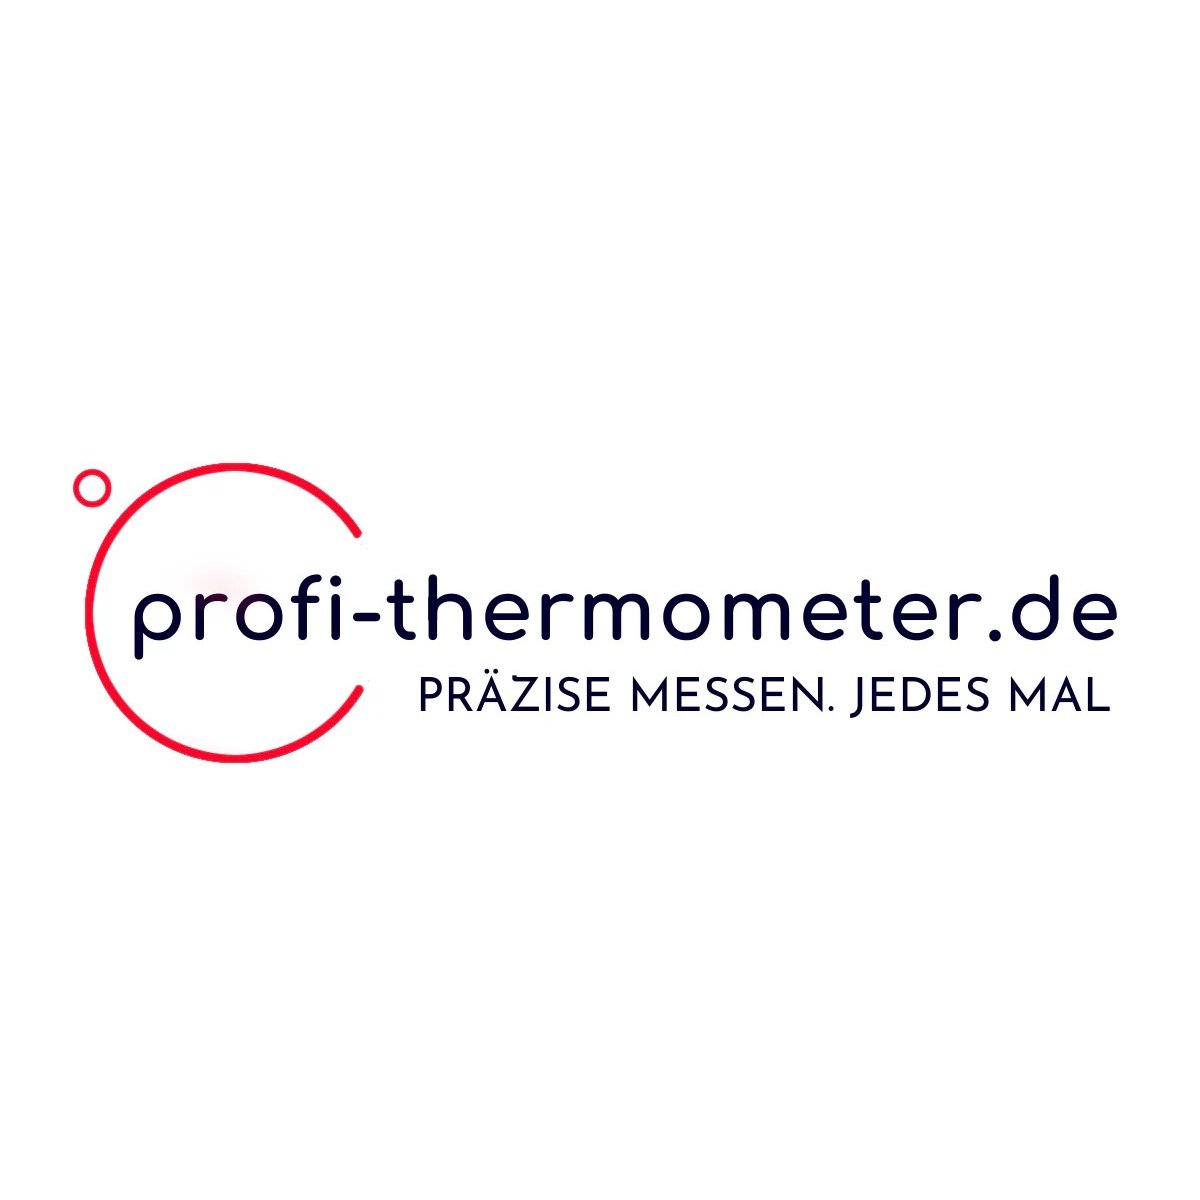 Profi-Thermometer GbR in Berlin - Logo